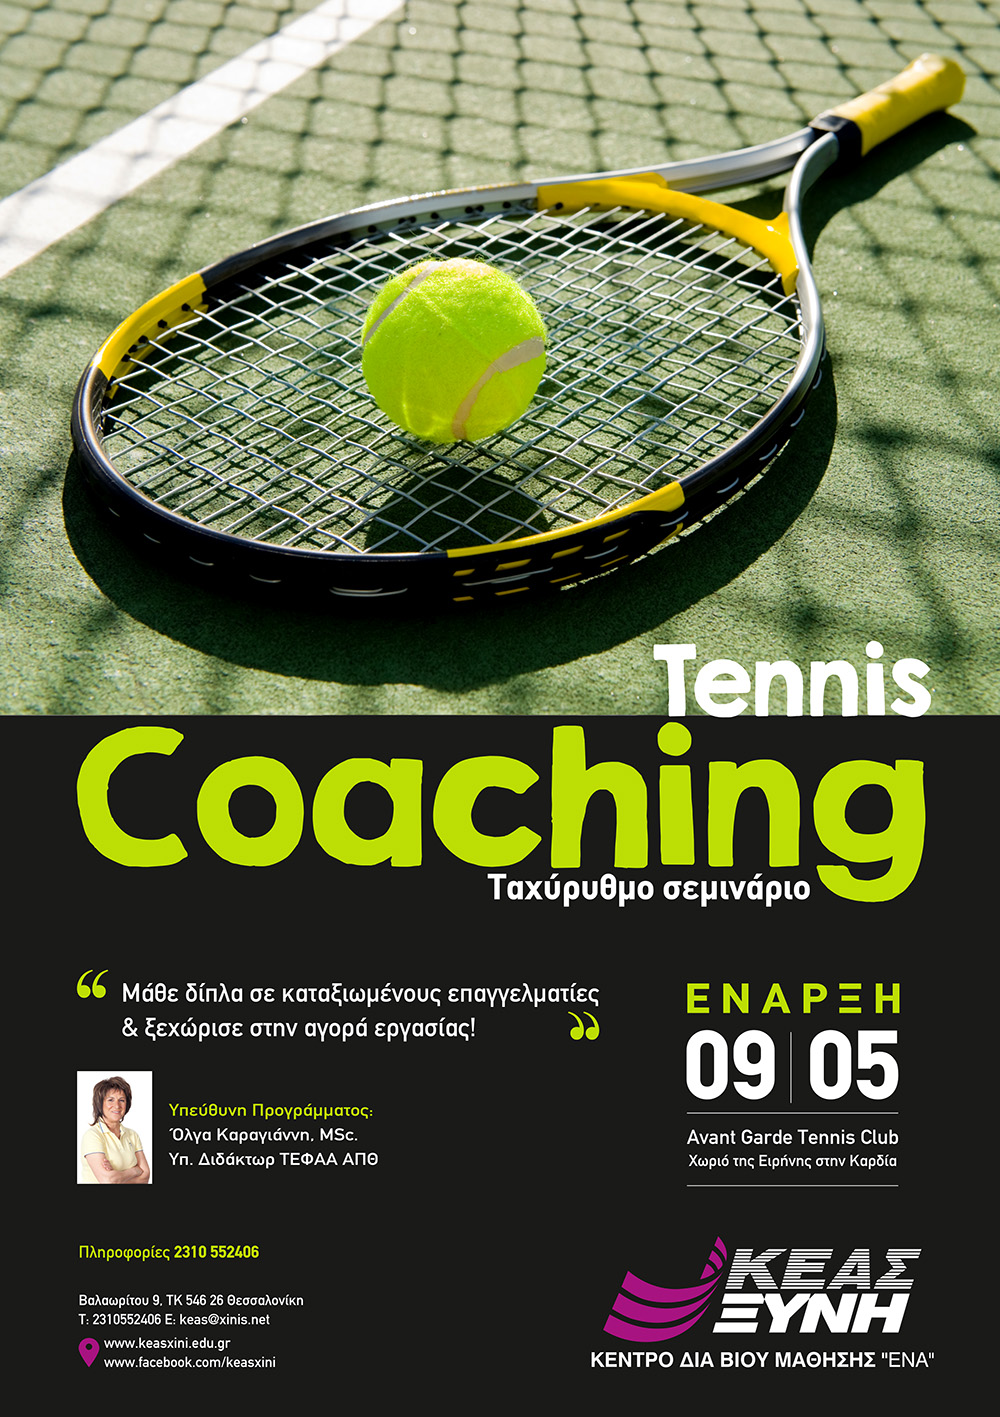 Tennis Coaching! – Ταχύρυθμο εξειδικευμένο πρόγραμμα με την υπογραφή της Όλγας Καραγιάννη